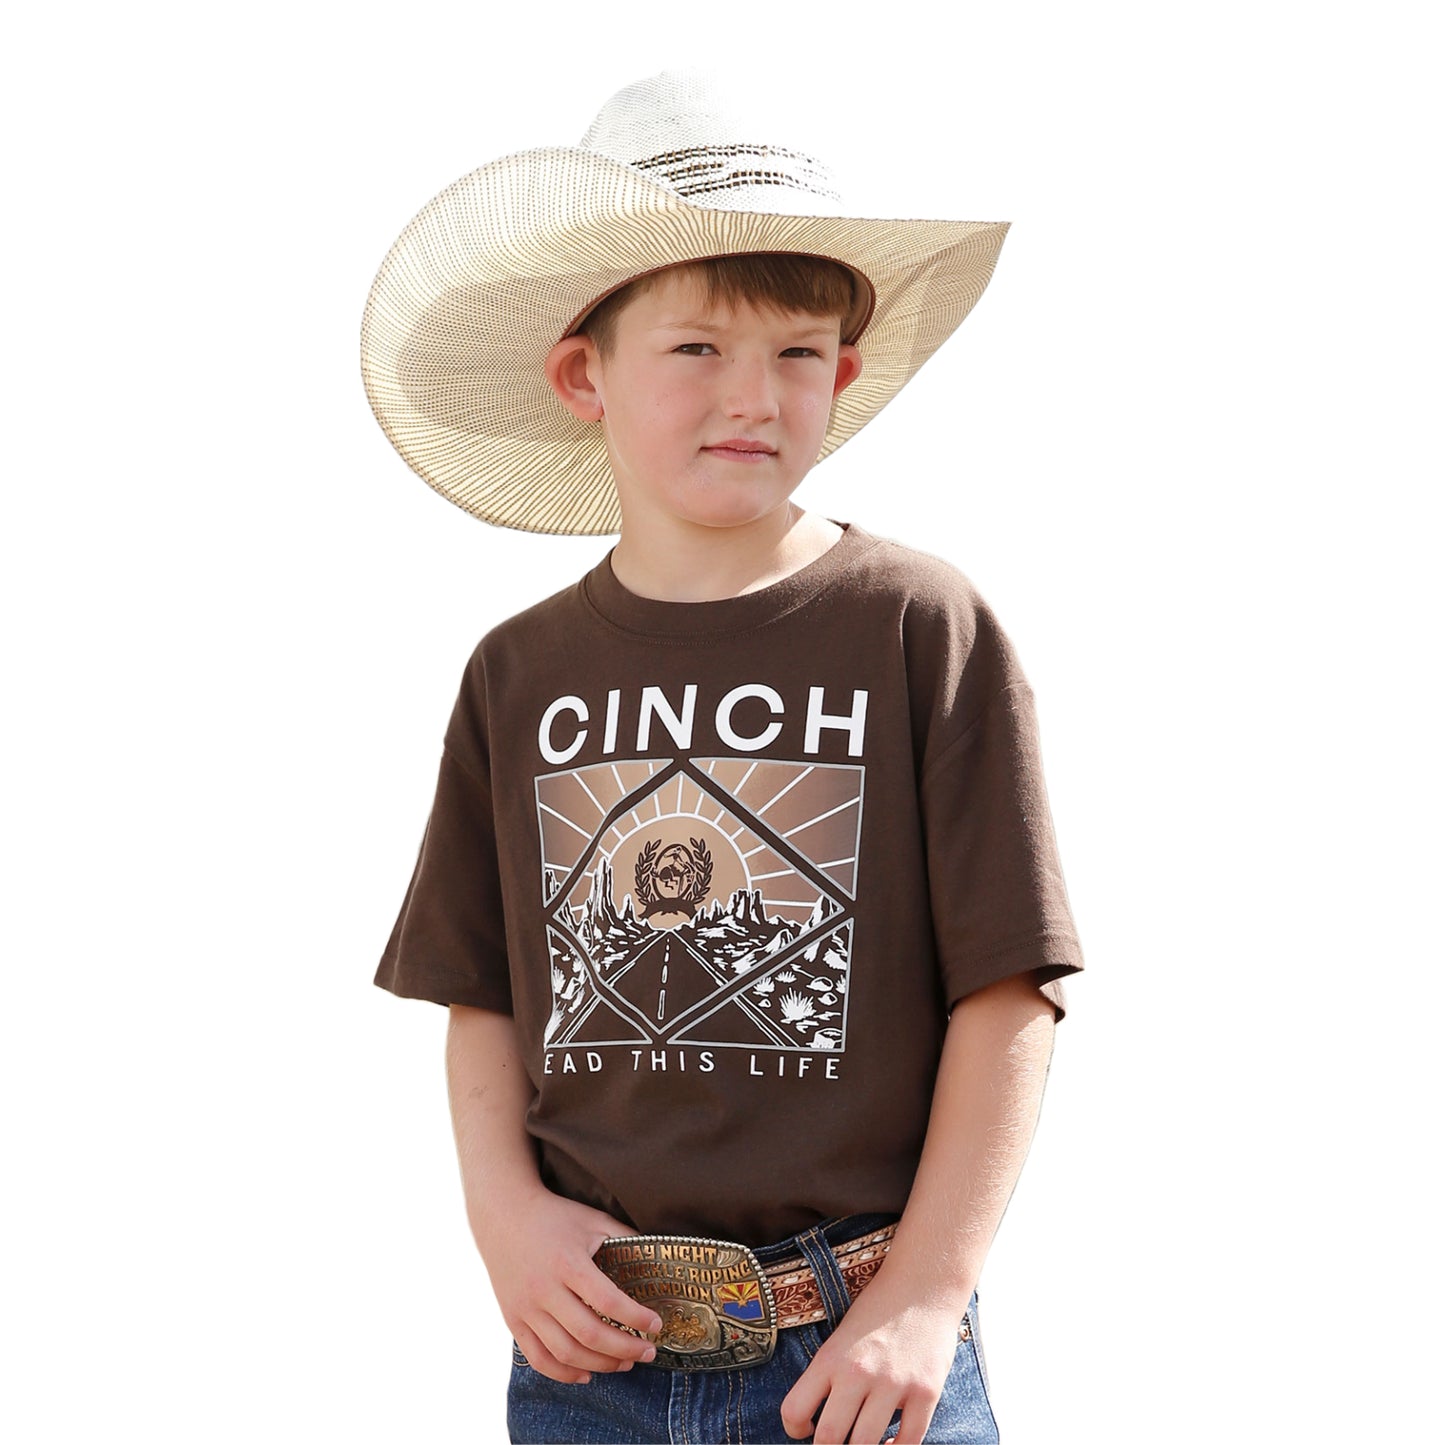 Cinch Jeans  Men's Cinch Cowboy Country Cap - Brown